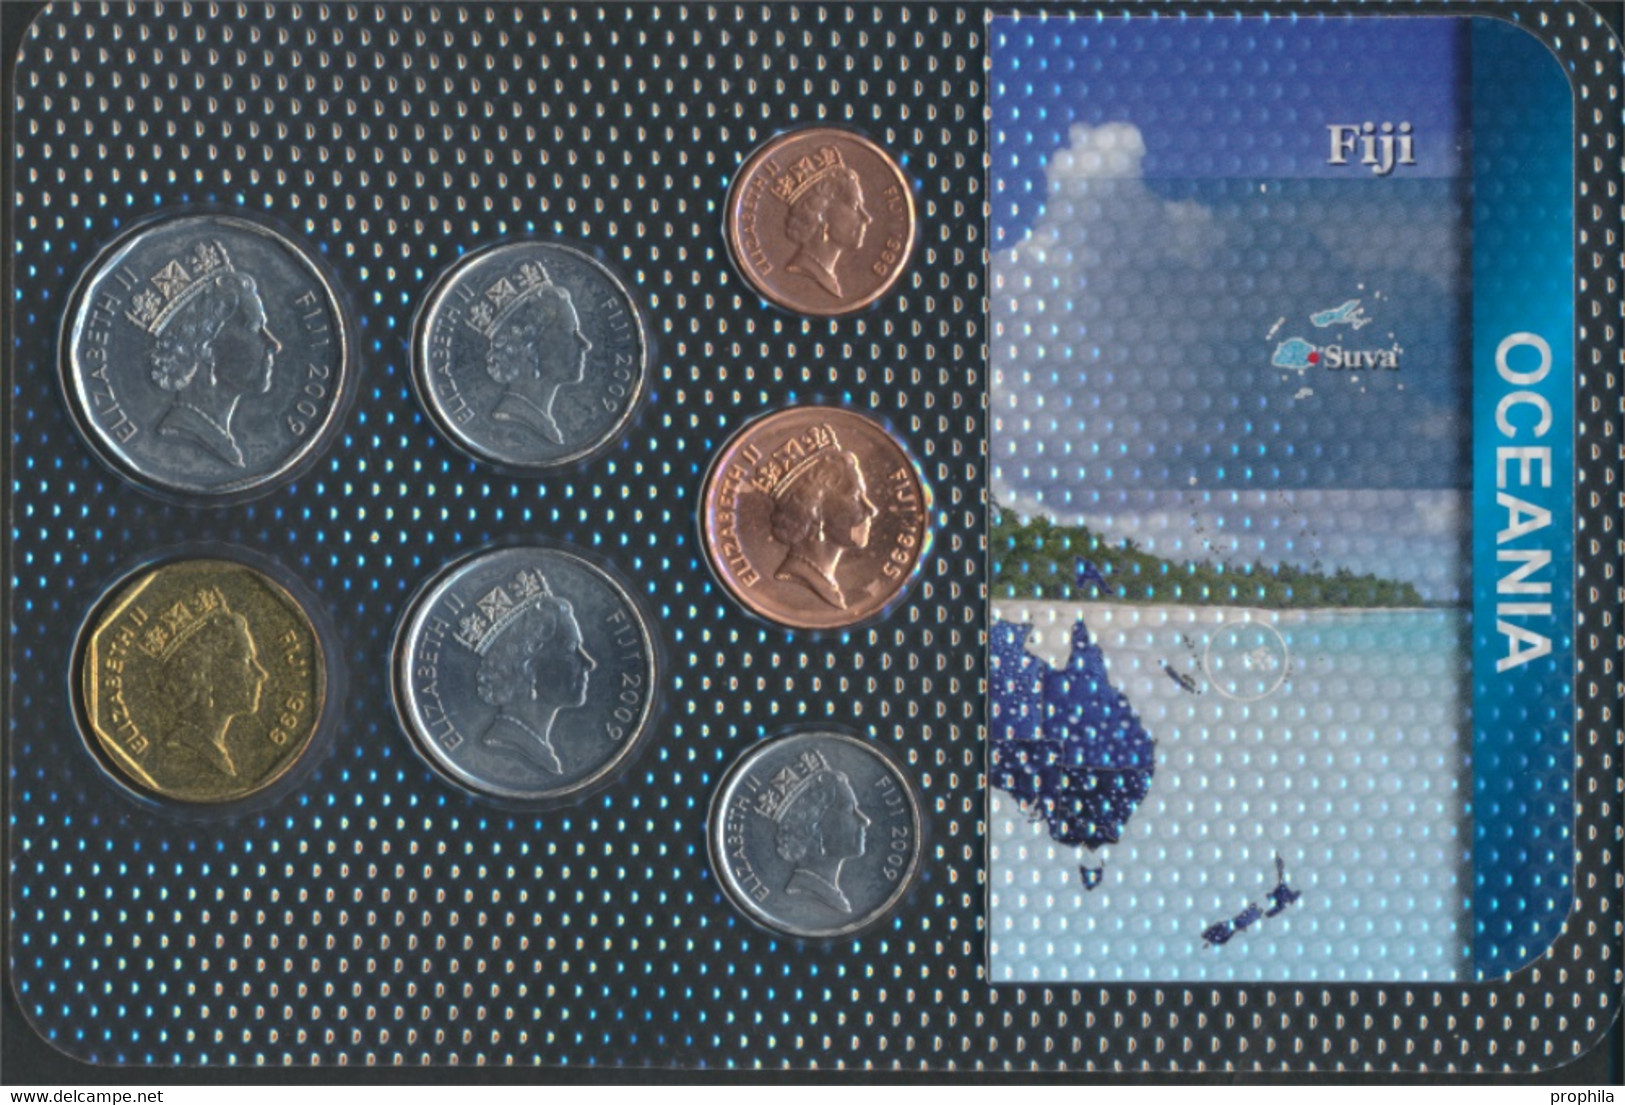 Fidschi-Inseln Stgl./unzirkuliert Kursmünzen Stgl./unzirkuliert Ab 1990 1 Cent Bis 1 Dollar (9663976 - Fidschi